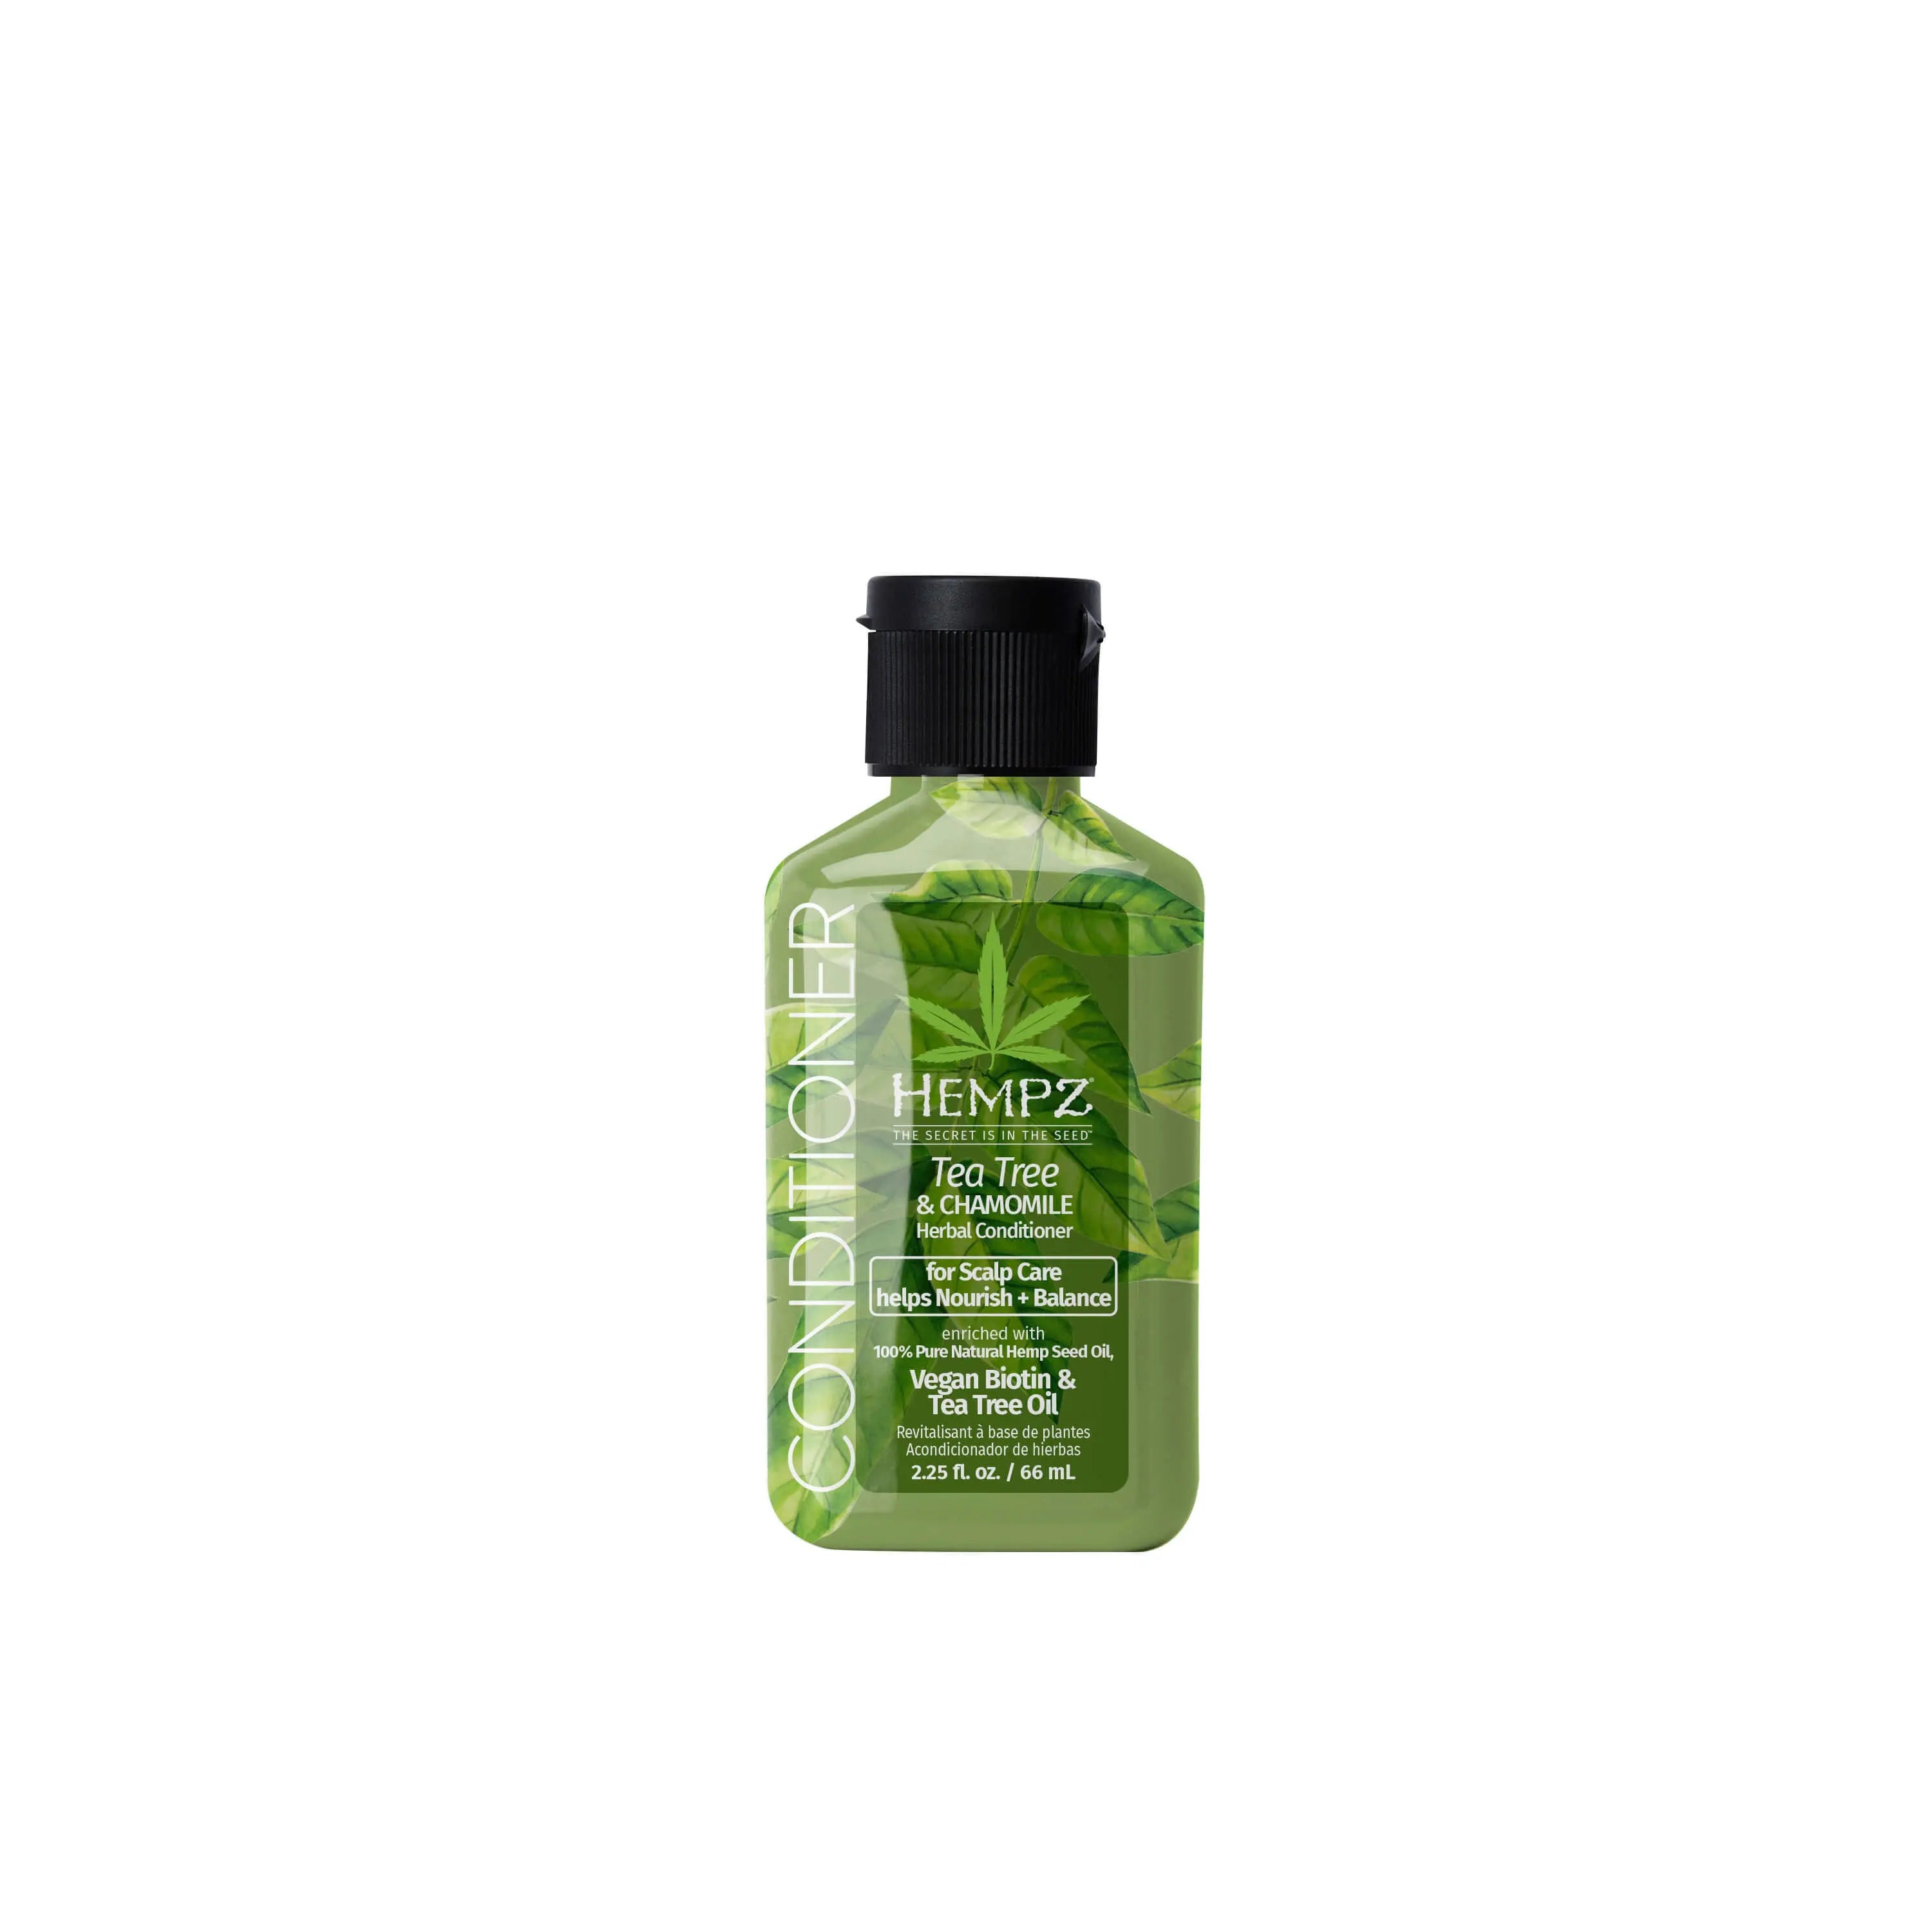 Hempz Tea Tree & Chamomile Herbal Shampoo with Vegan Biotin & Tea